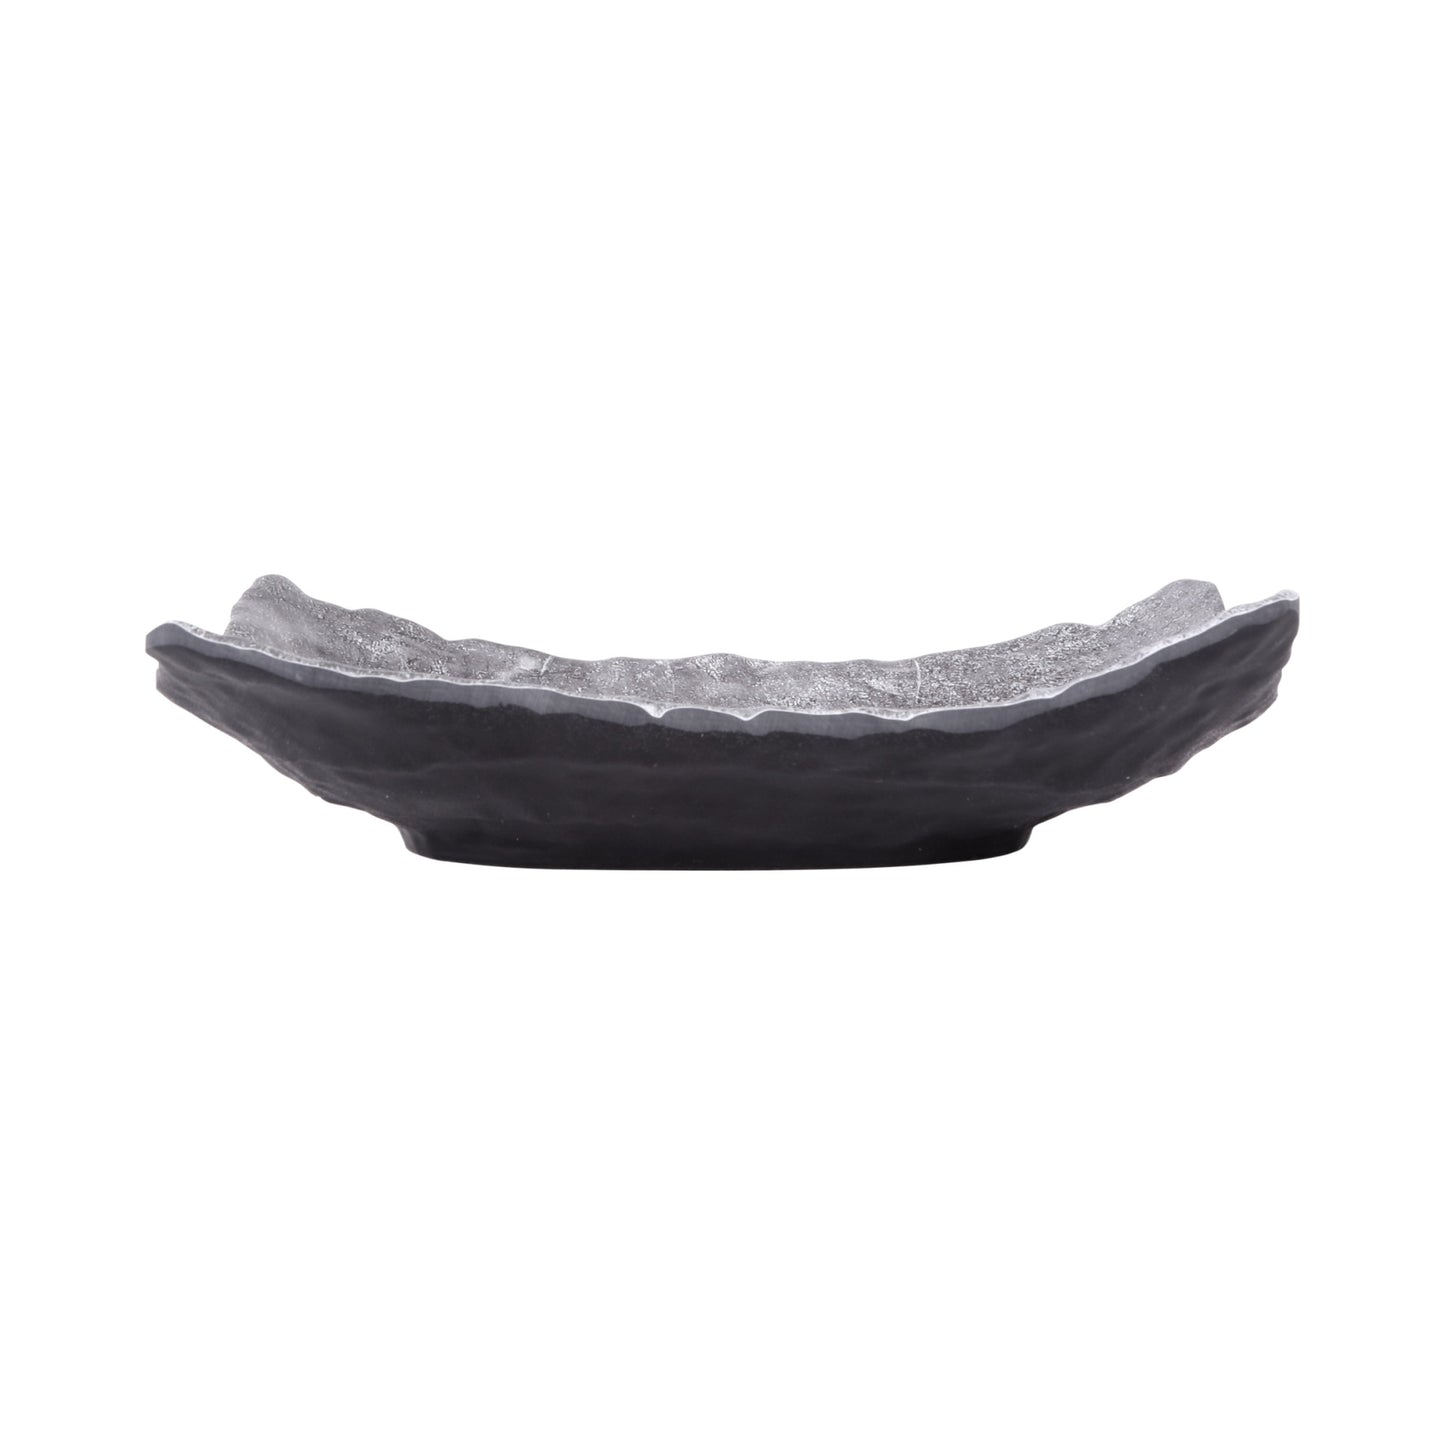 Melamine Rectangular Bowl - Coal